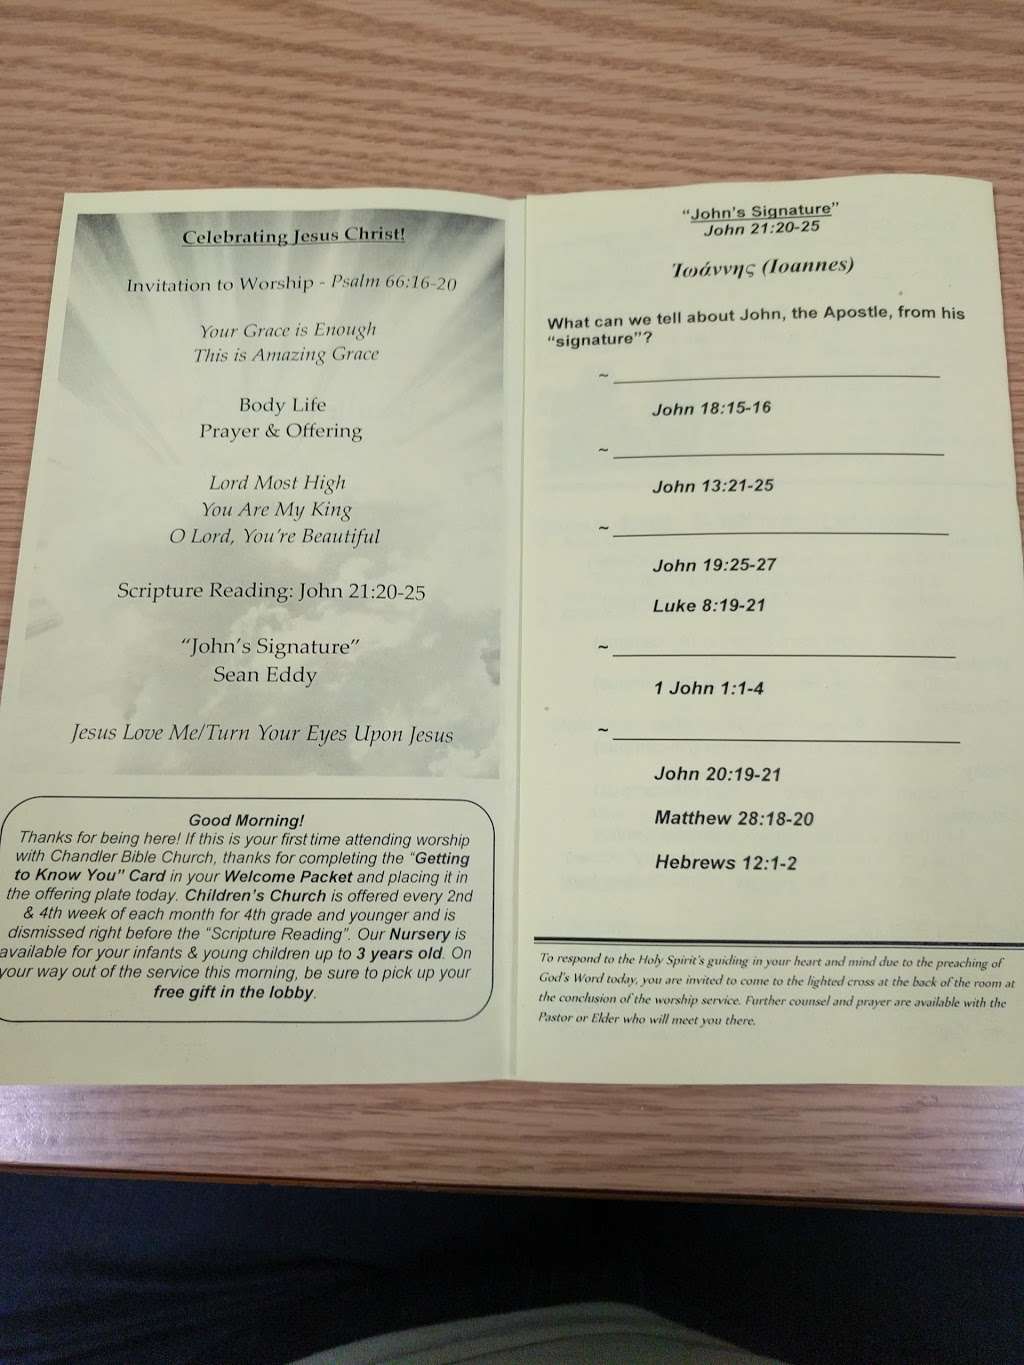 Chandler Bible Church | 1200 N Price Rd, Chandler, AZ 85226, USA | Phone: (480) 786-3124